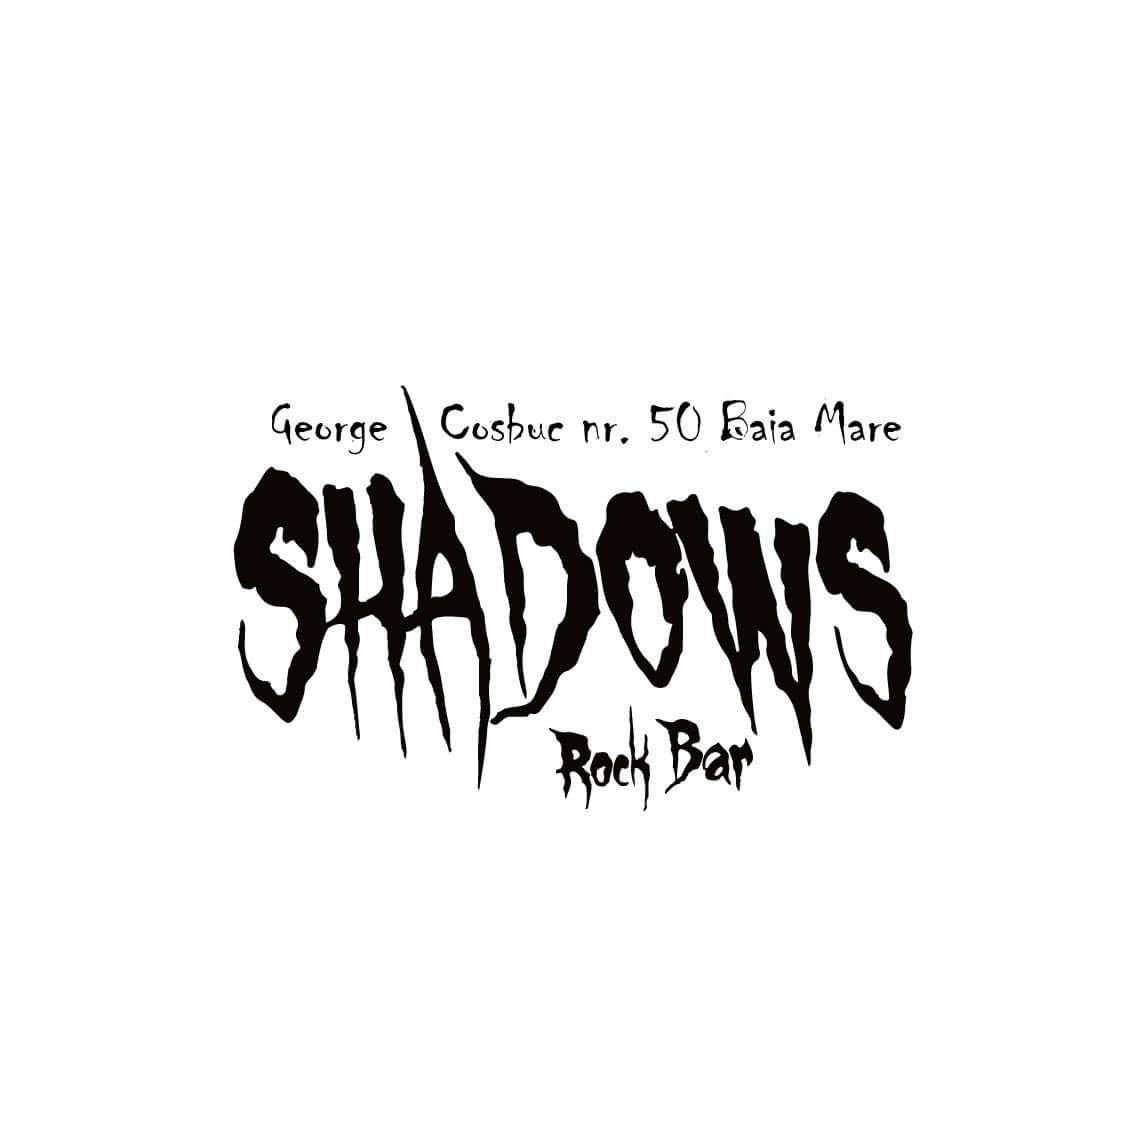 Shadows Rock Bar